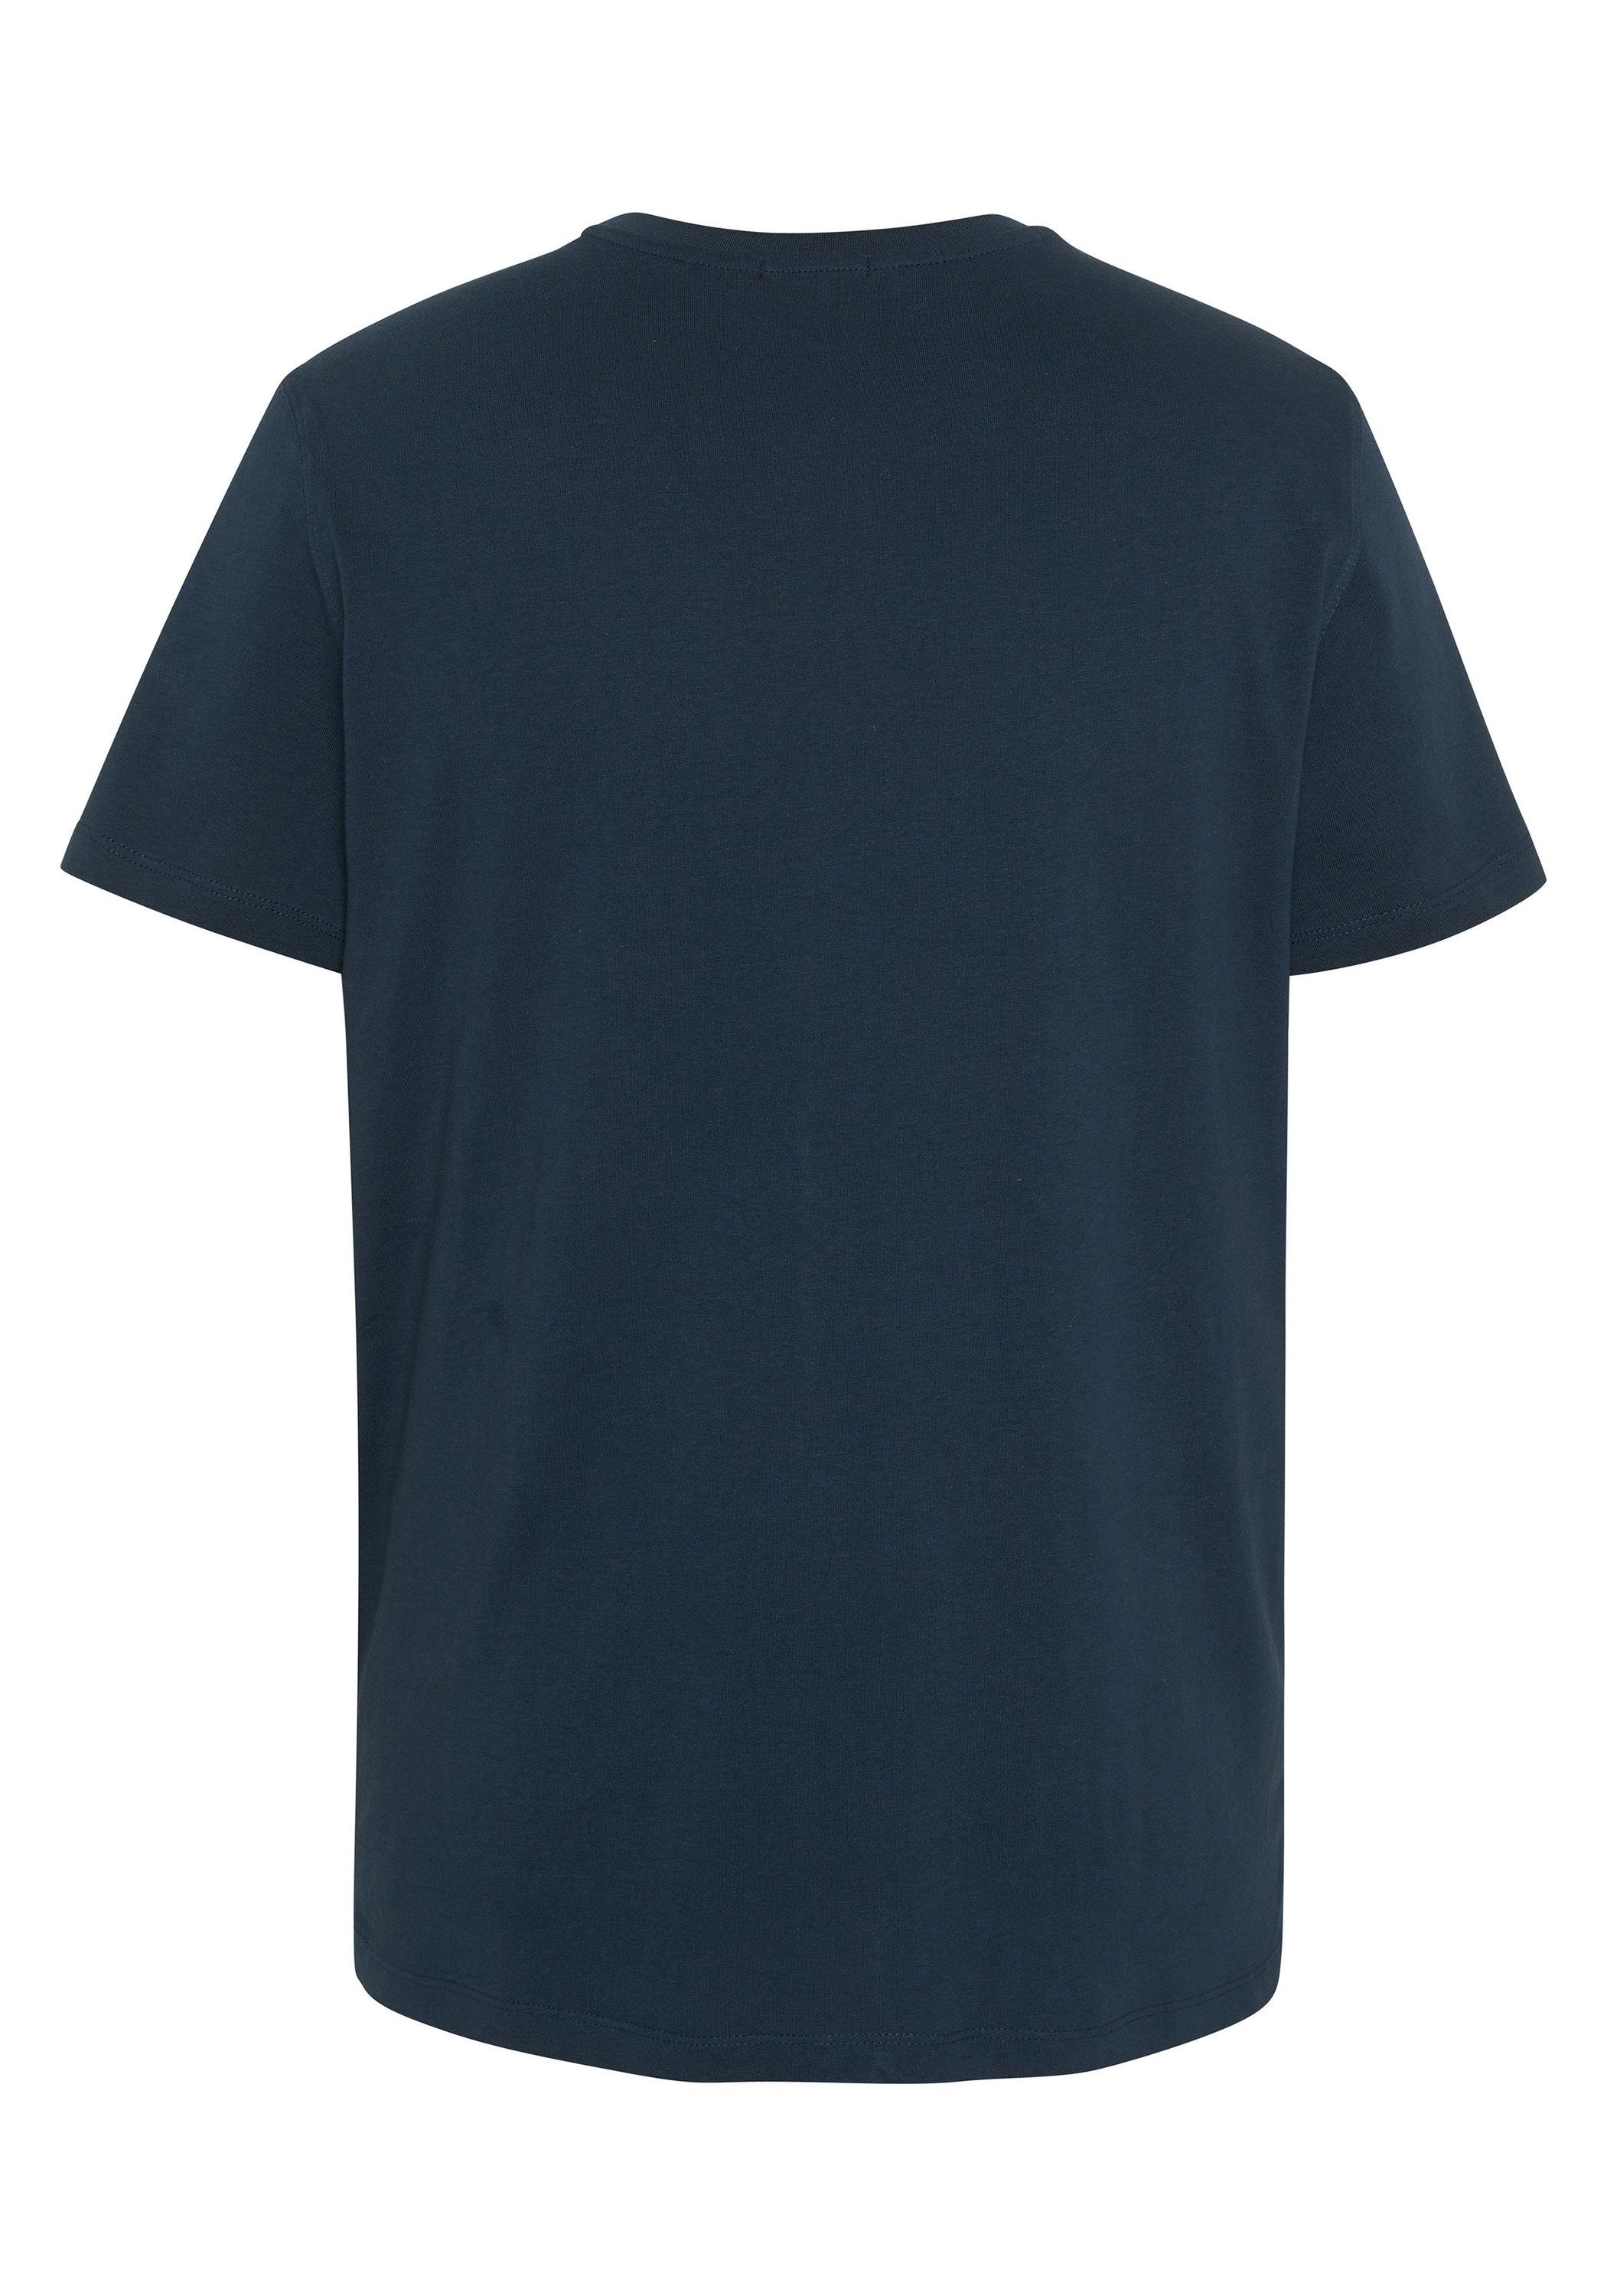 T-Shirt mit Print-Shirt Chiemsee Label-Schriftzug Total 19-4010 Eclipse 1